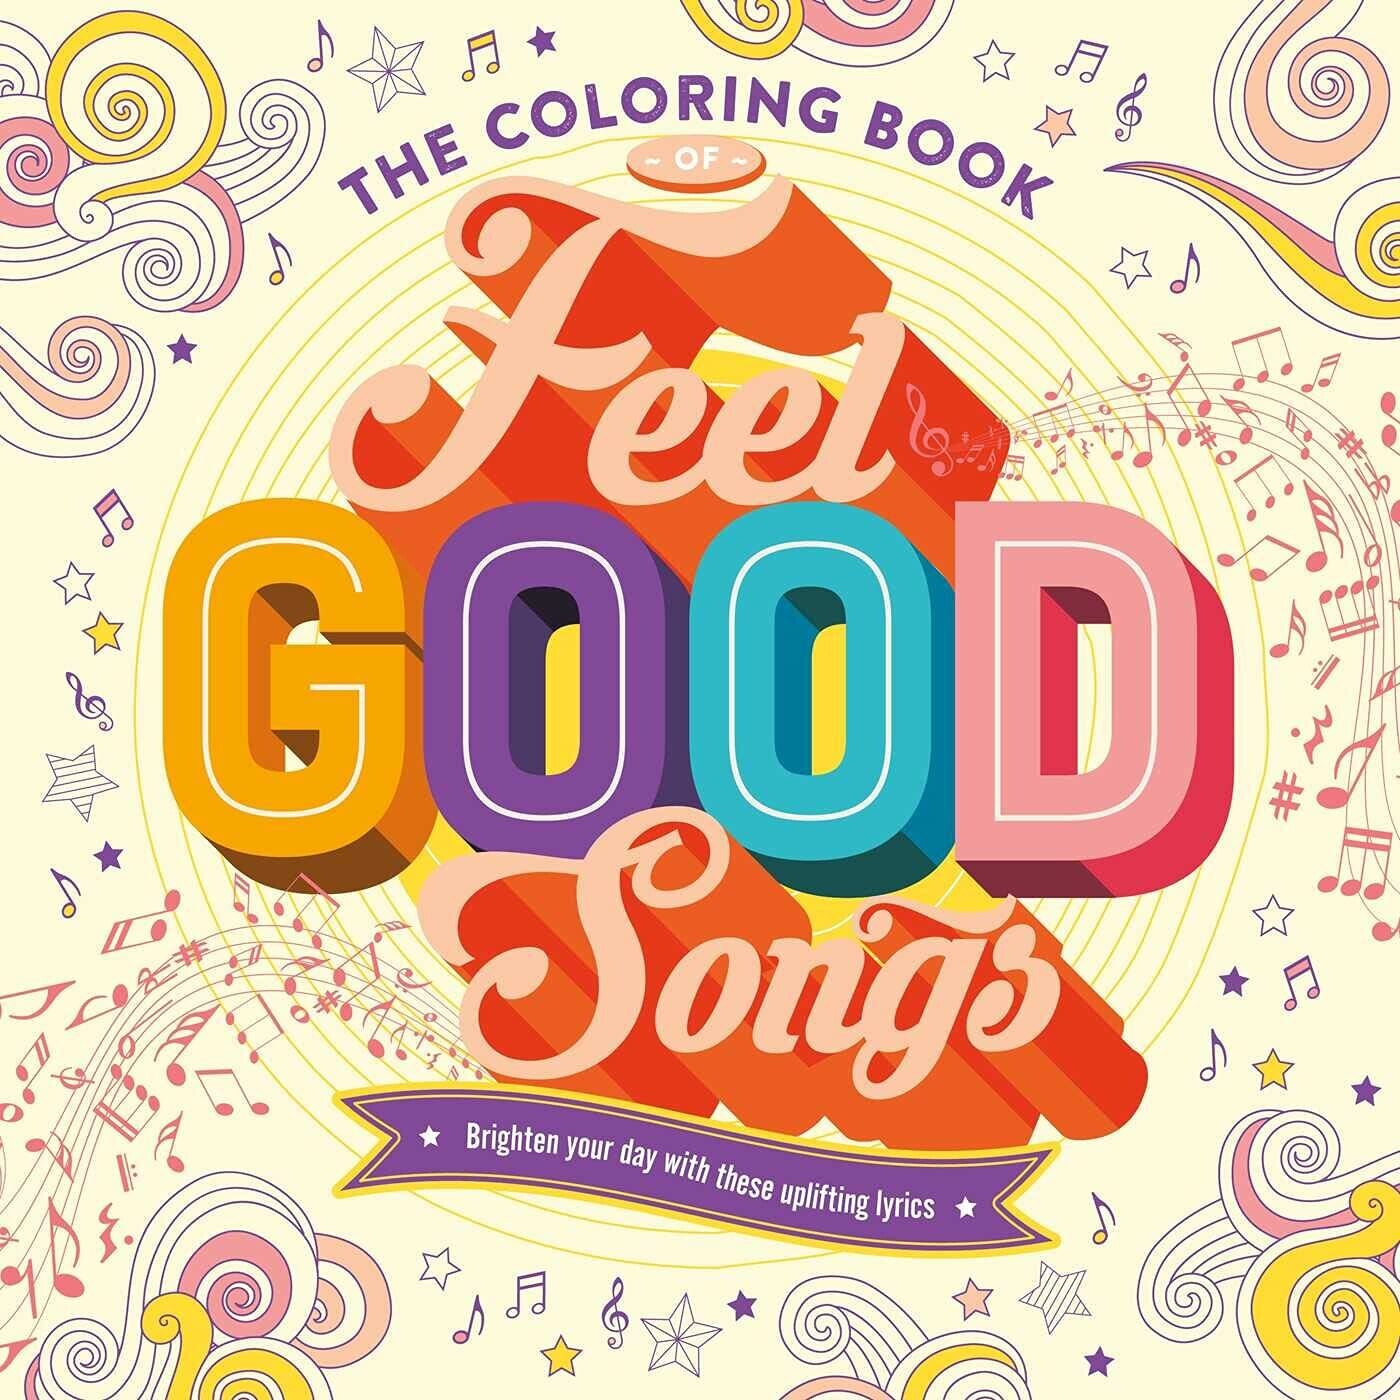 Coloring Book of Feel Good Songs